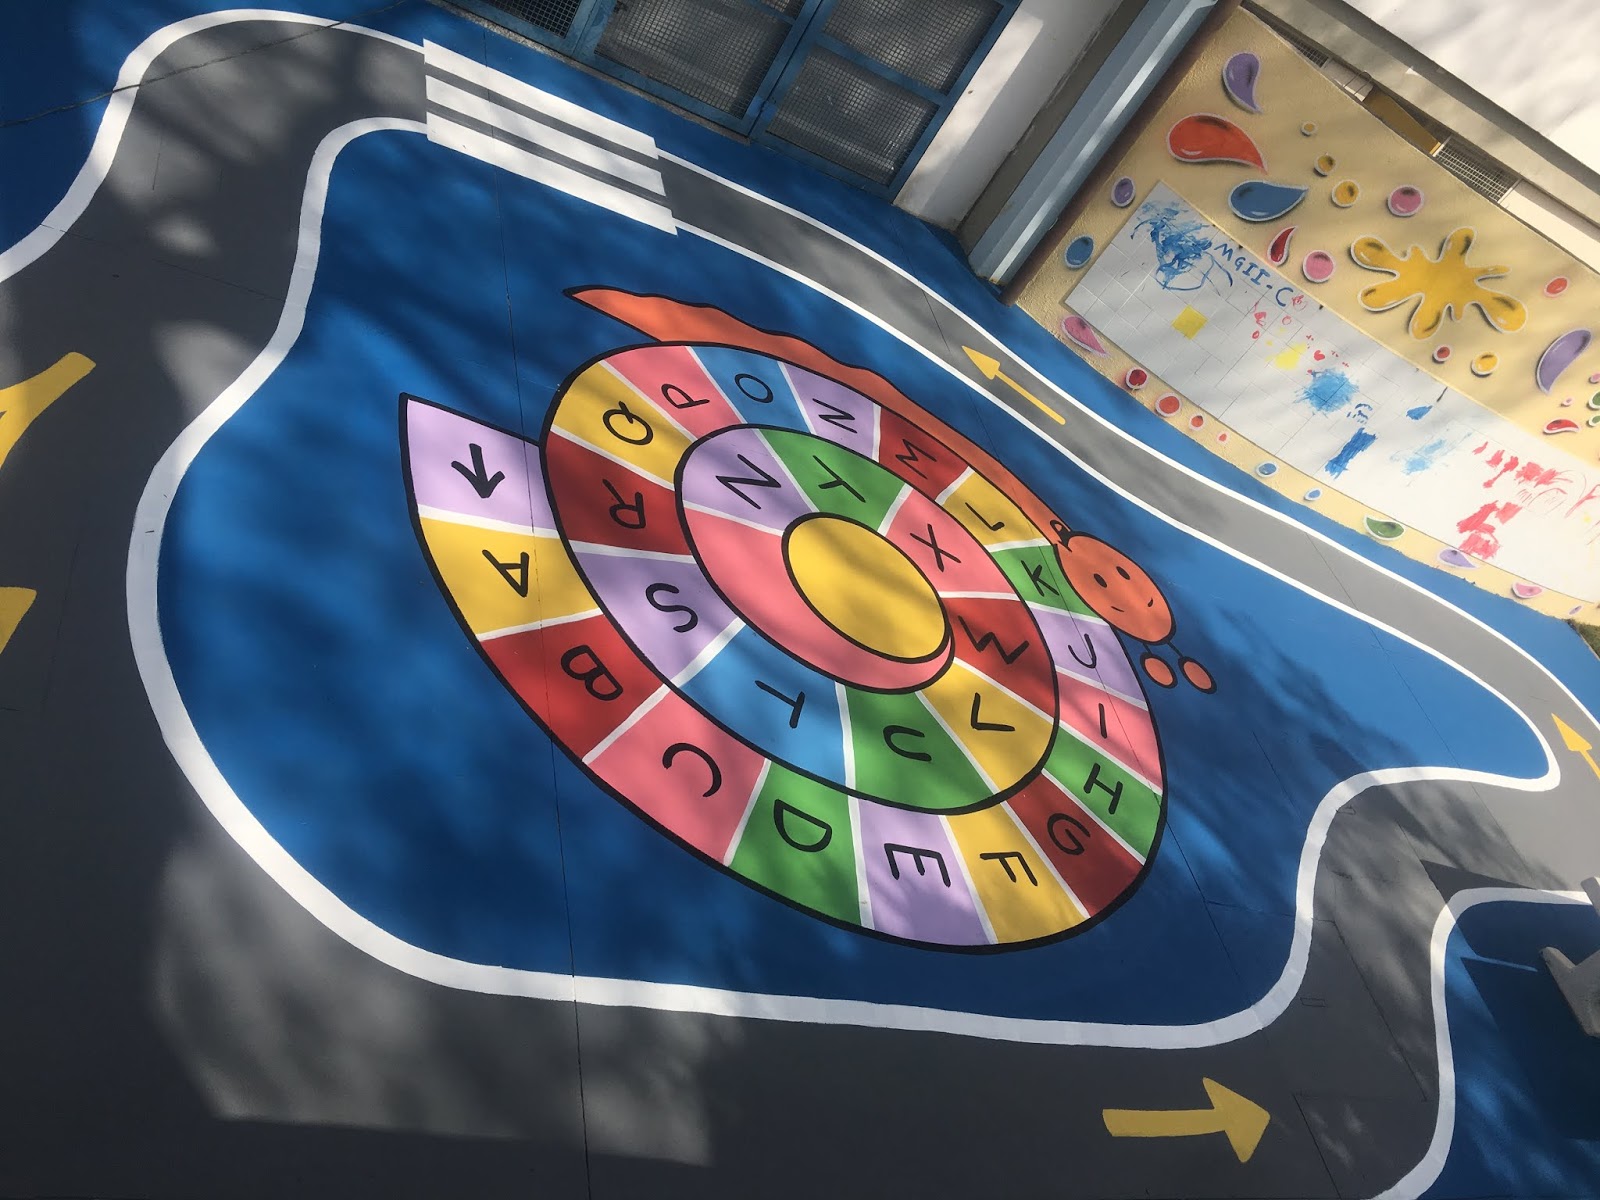 Pintura no piso - Circuito funcinal para crianças - Como fazer